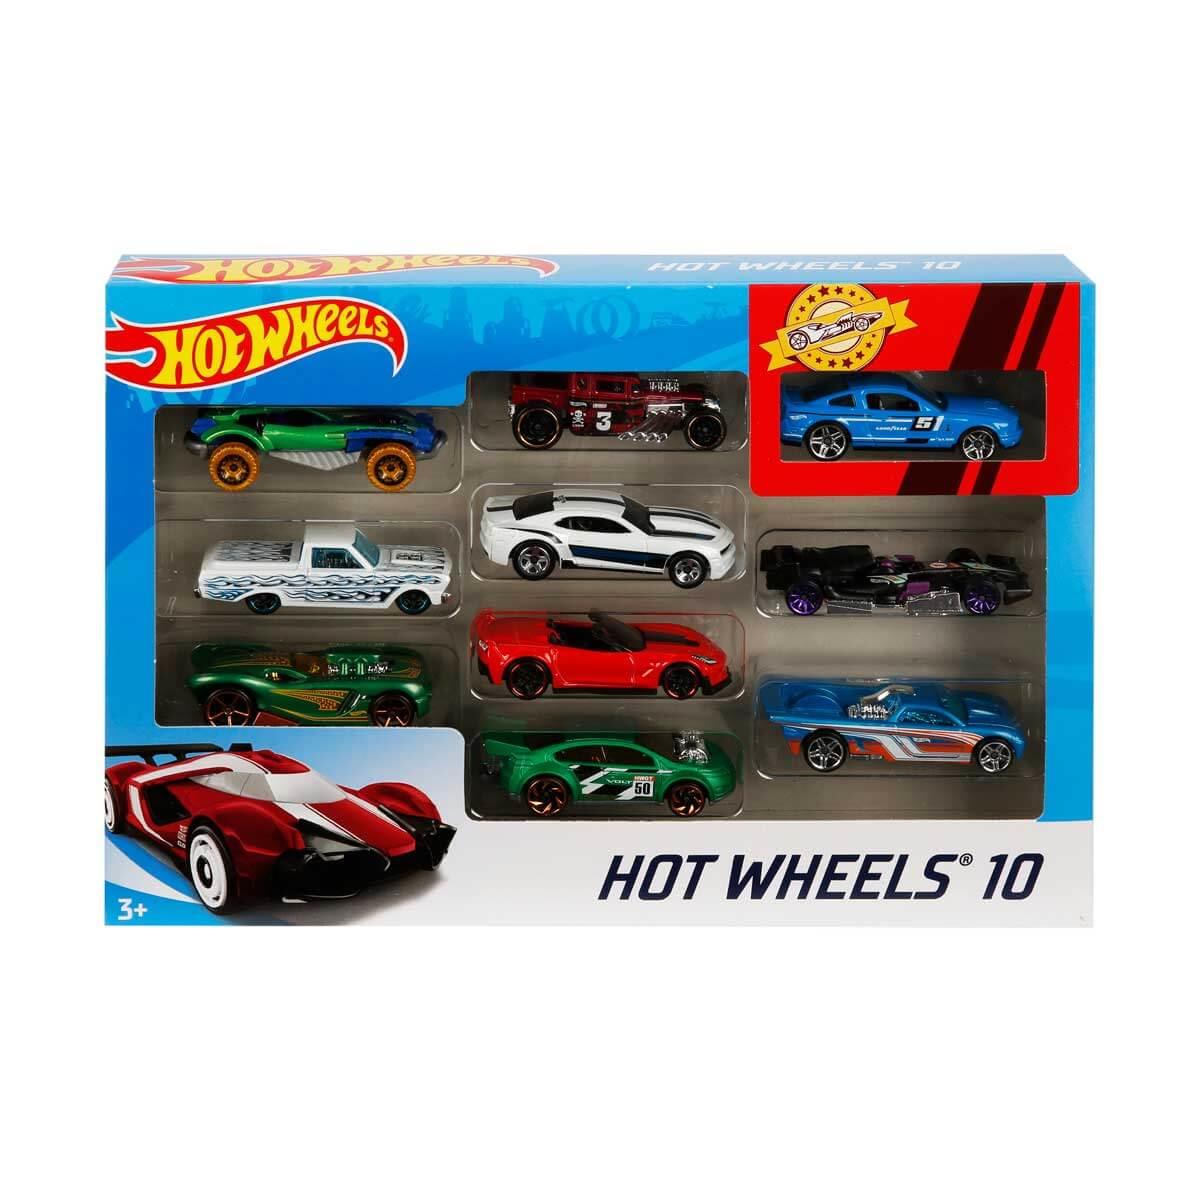 Hot Wheels 10'lu Araba Seti 3+ Yaş